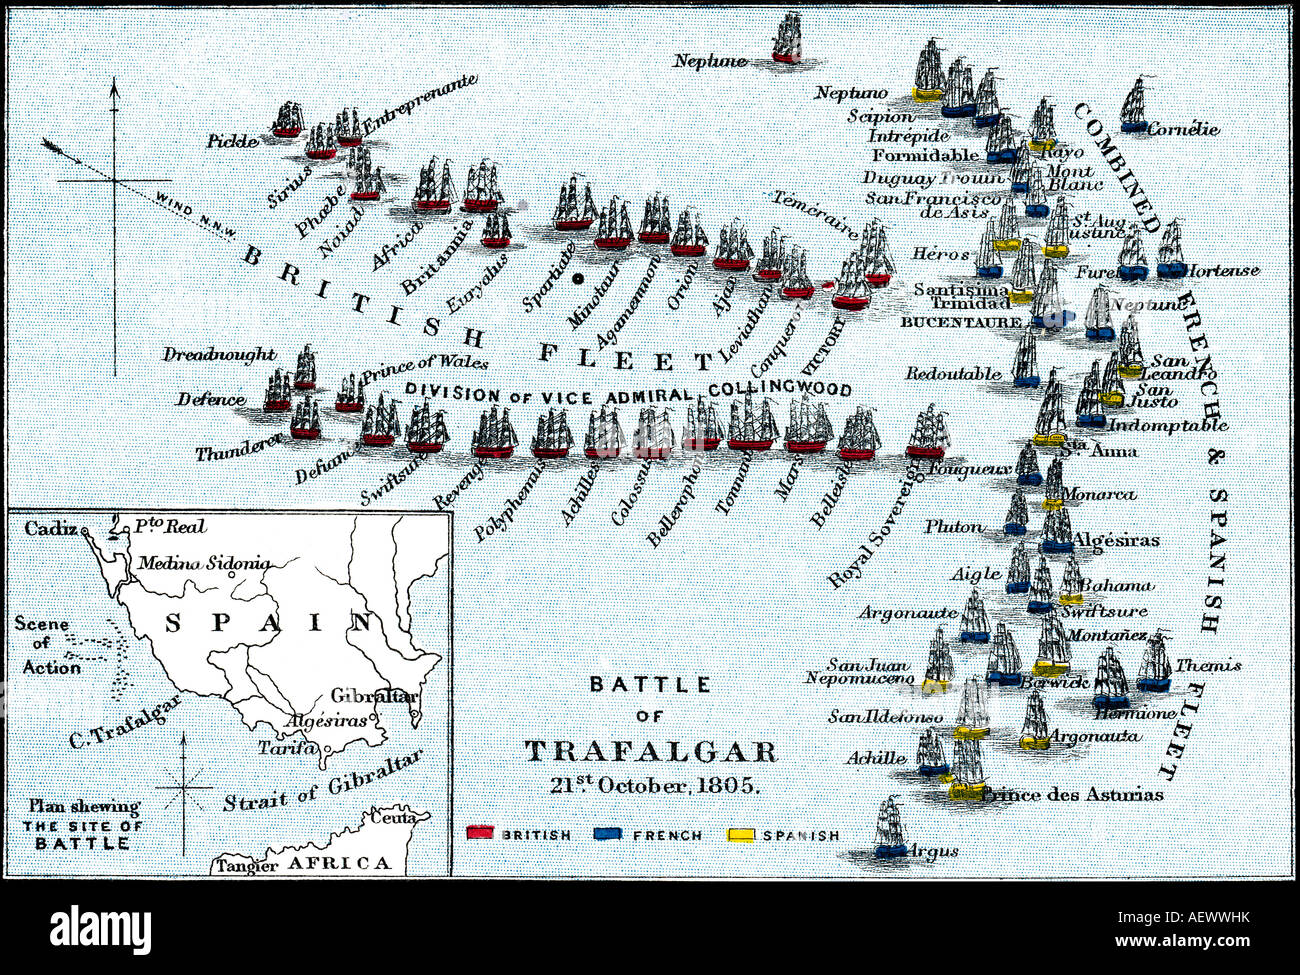 Nelsons Battle of Trafalgar Chart 